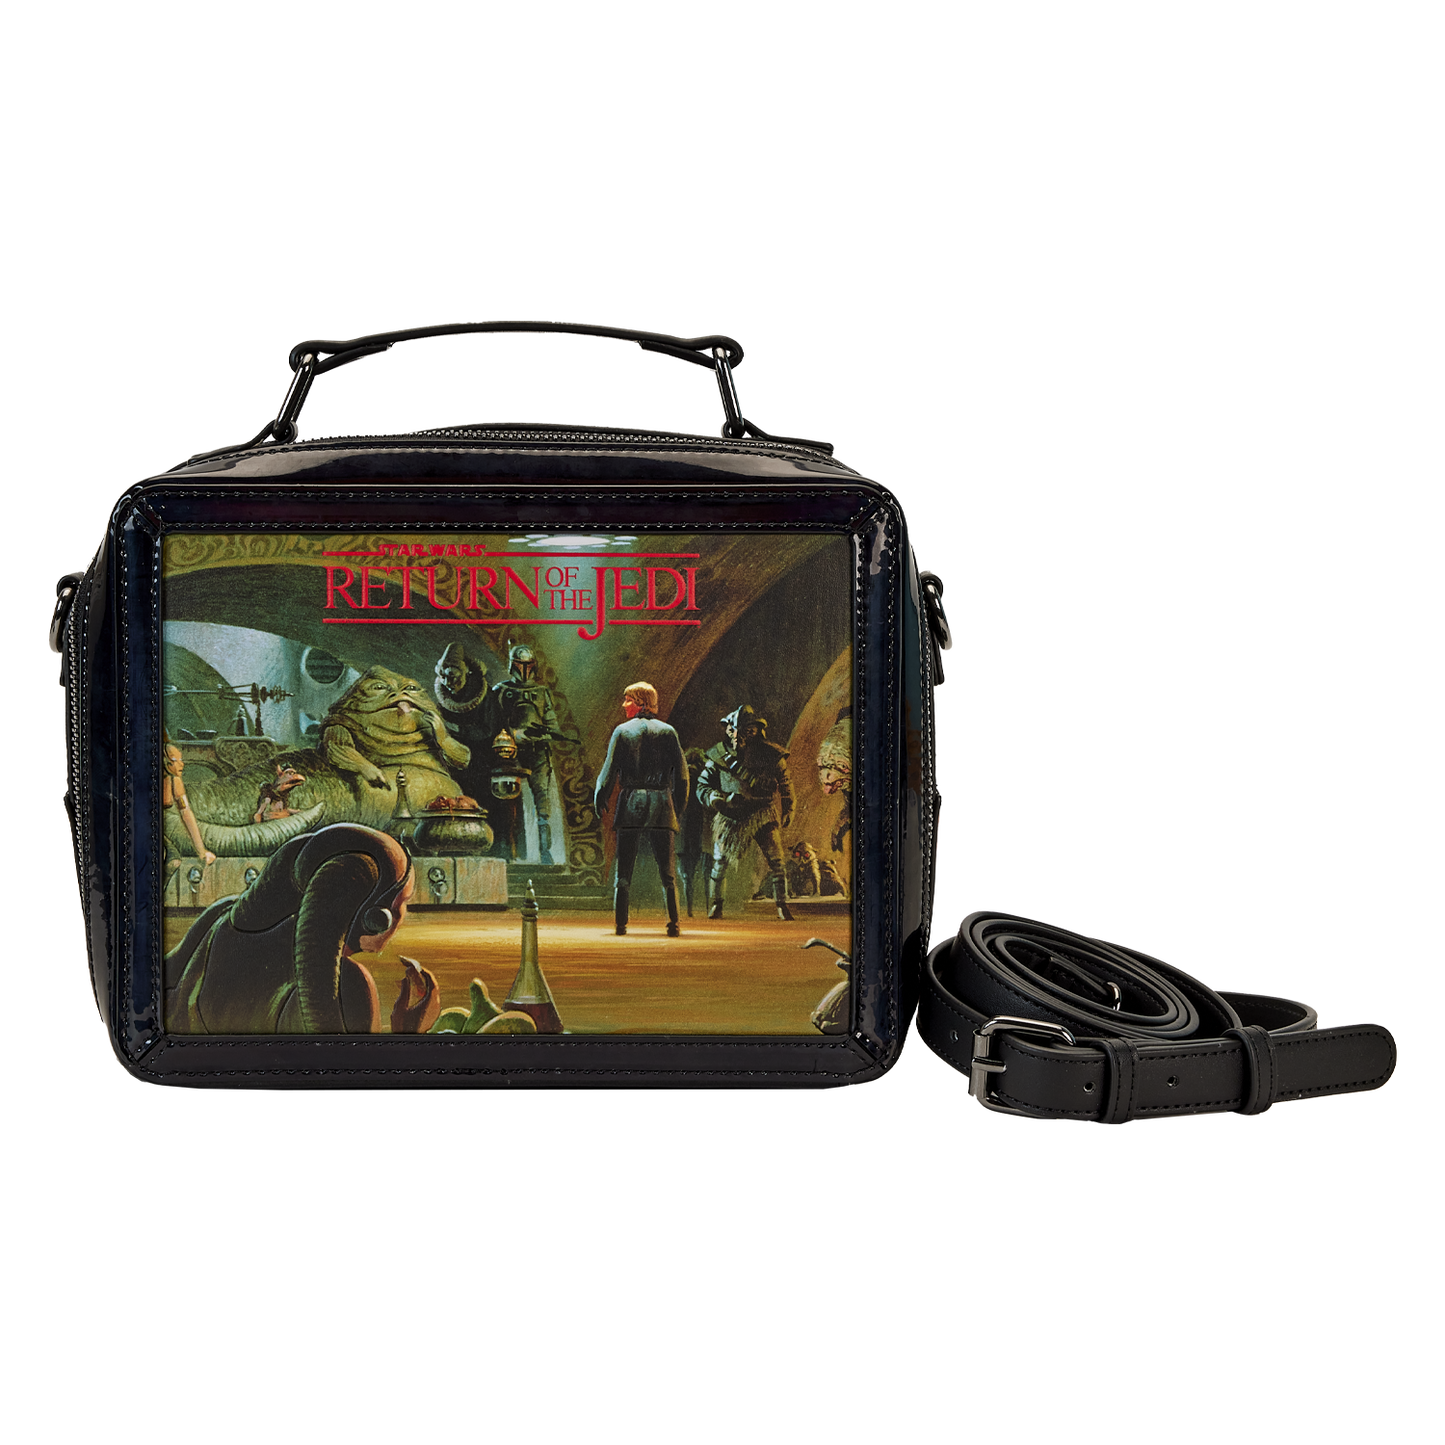 Star Wars Return of the Jedi Lunchbox Crossbody purse